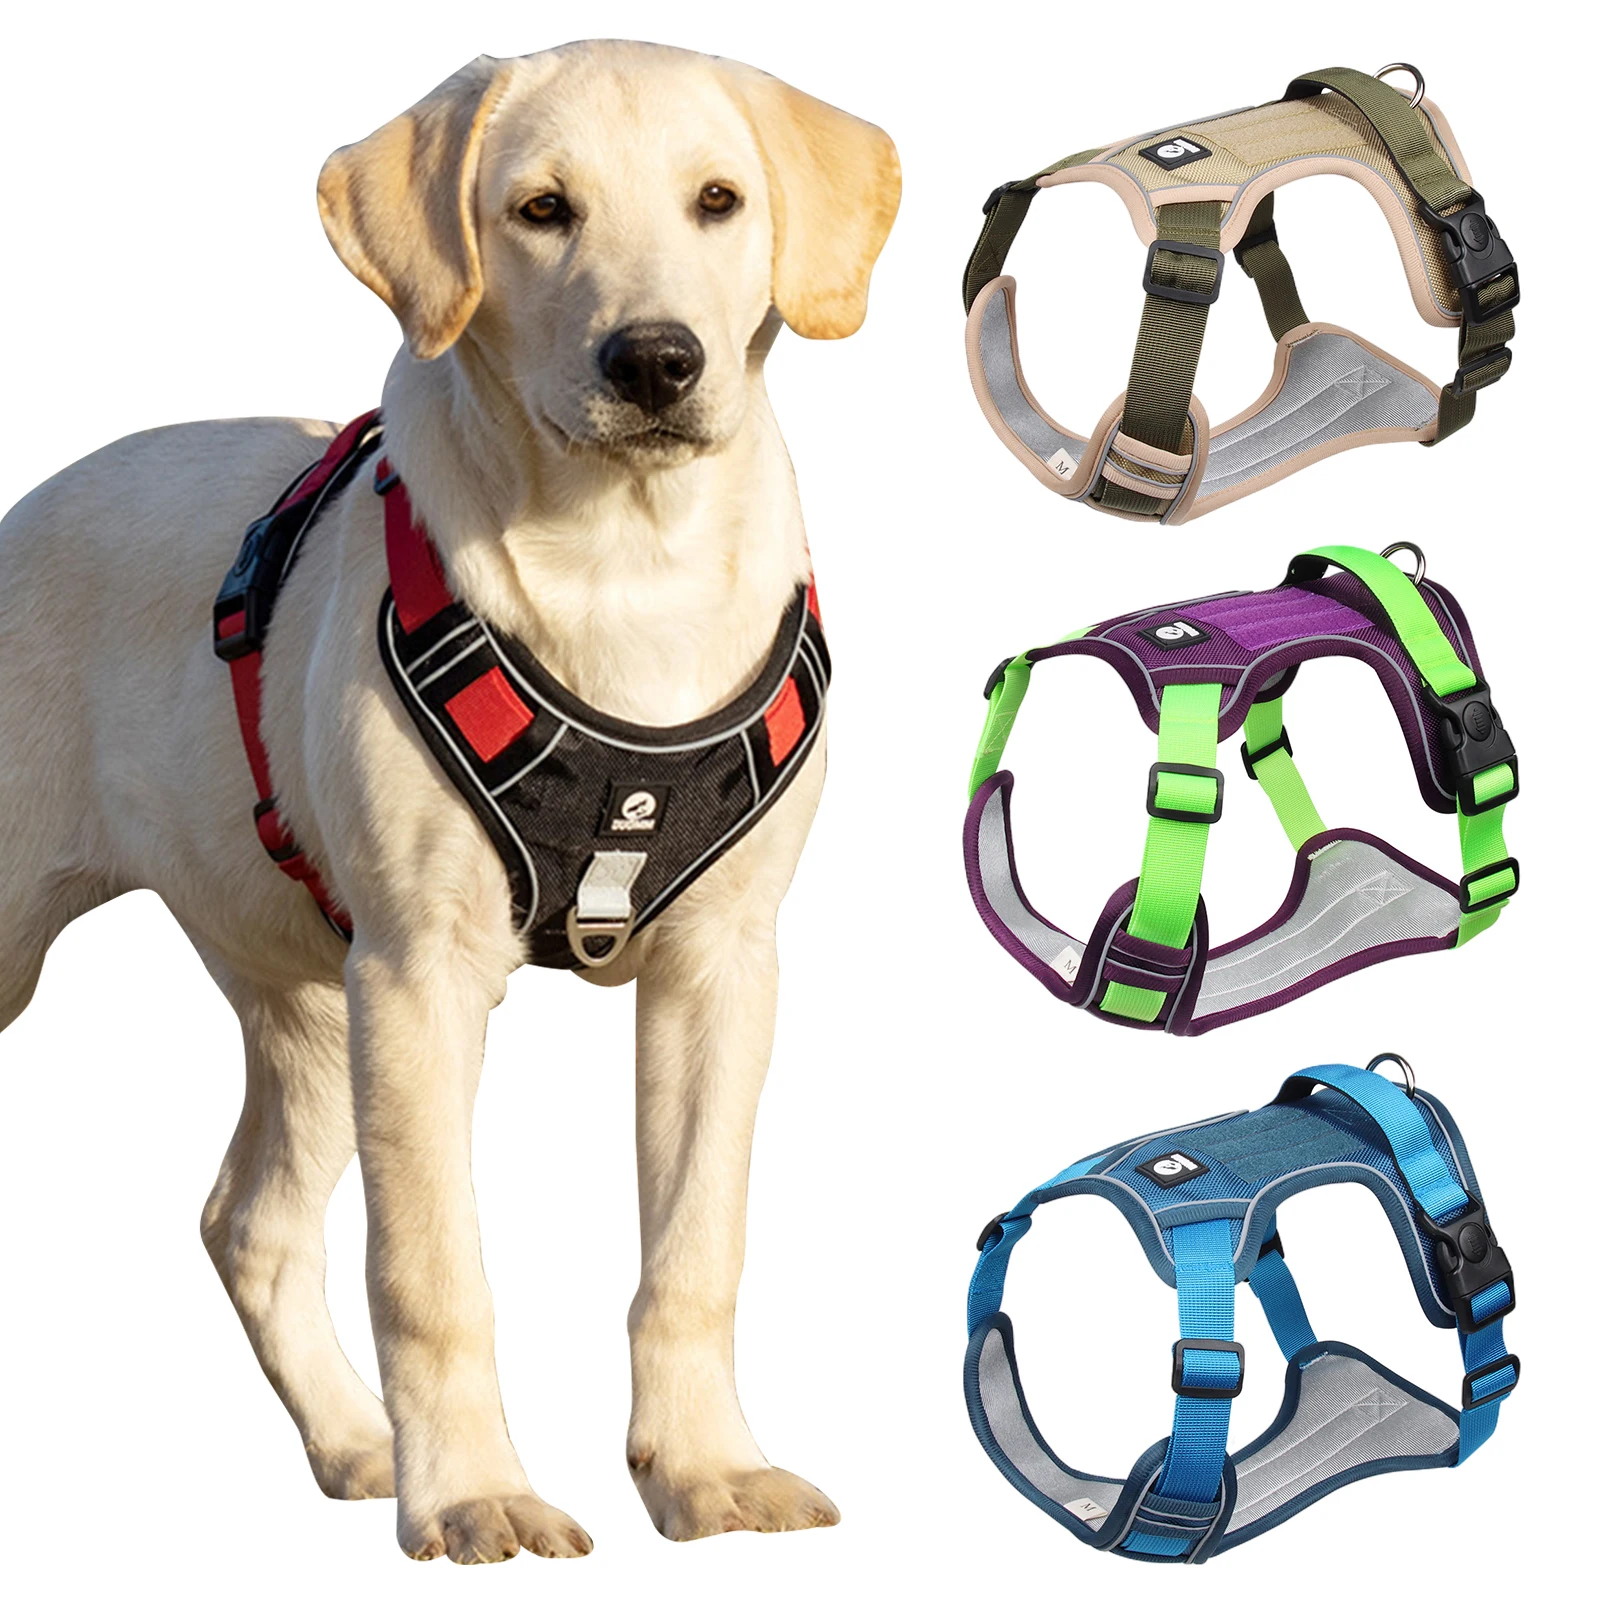 

Dog Harness Reflective Midium Large Dogs Tactical Vest Big 1680D Waterproof Oxford Cloth Dog Harnesses Pet Accessoires Supplies